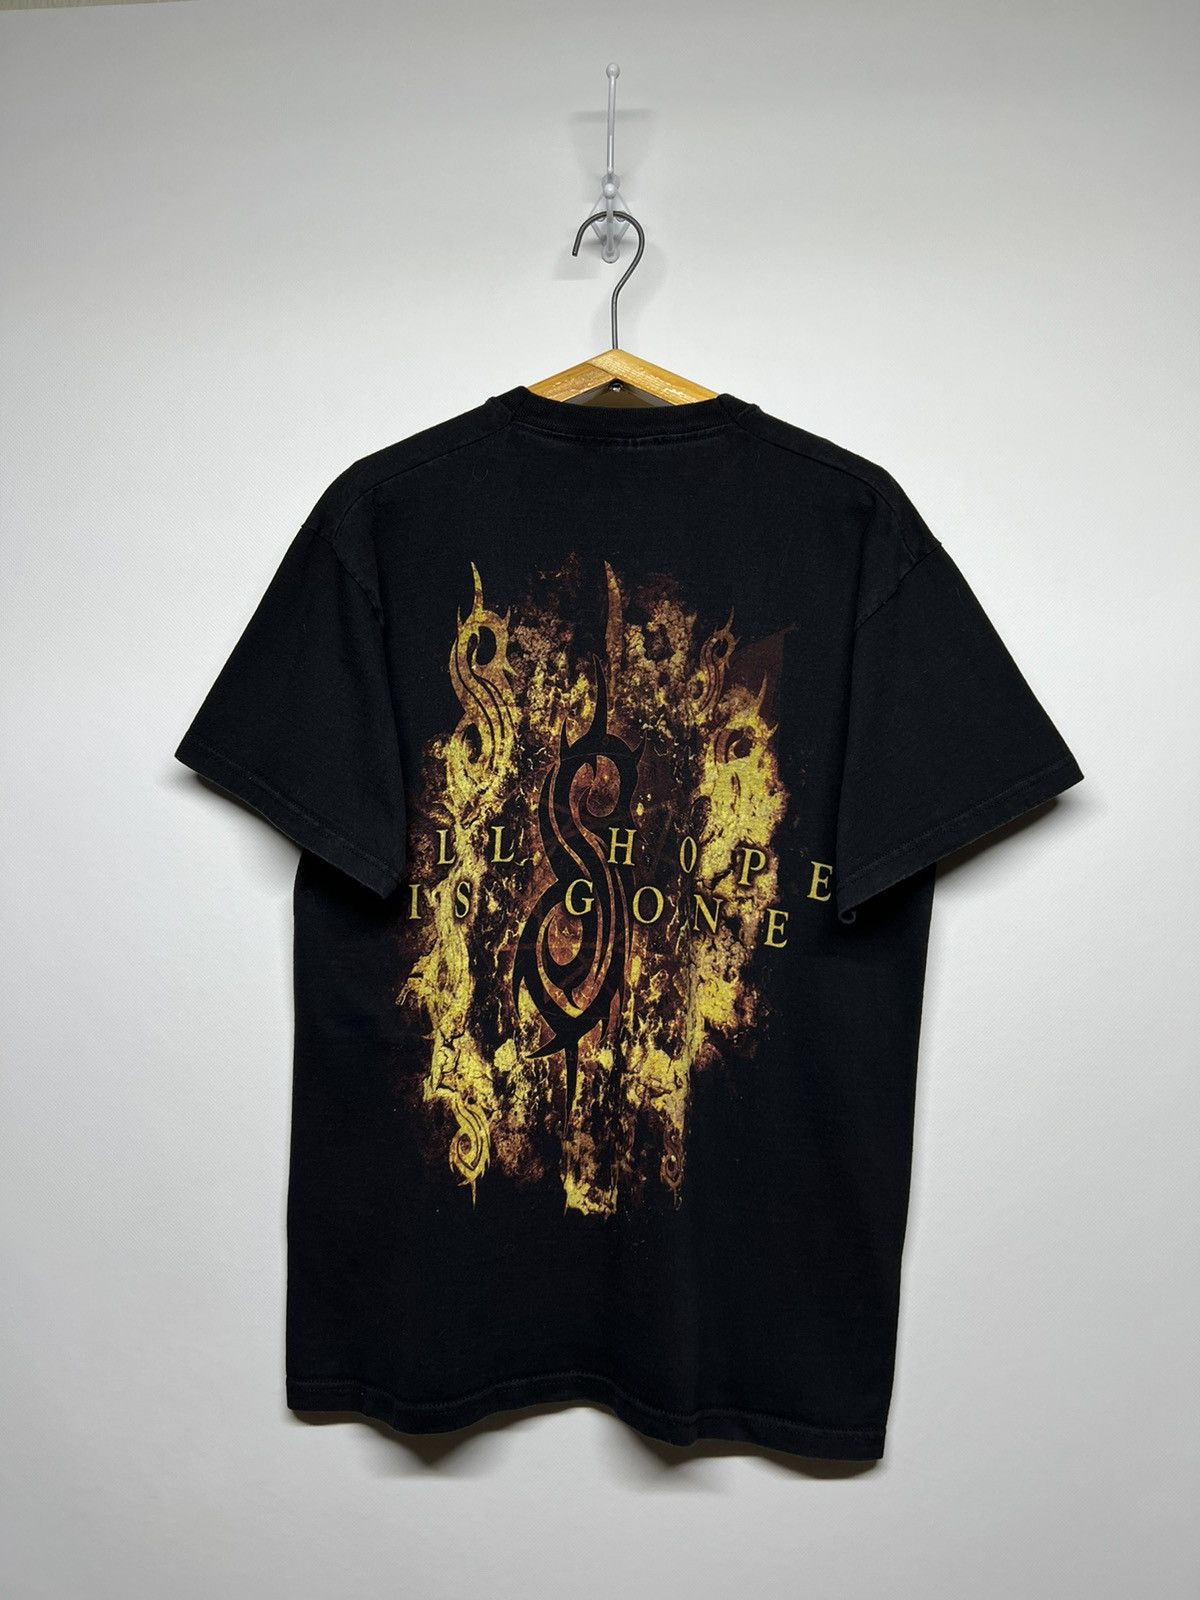 Vintage Vintage 2009 Slipknot All Hope Is Gone Tour T-Shirt Size US M / EU 48-50 / 2 - 2 Preview